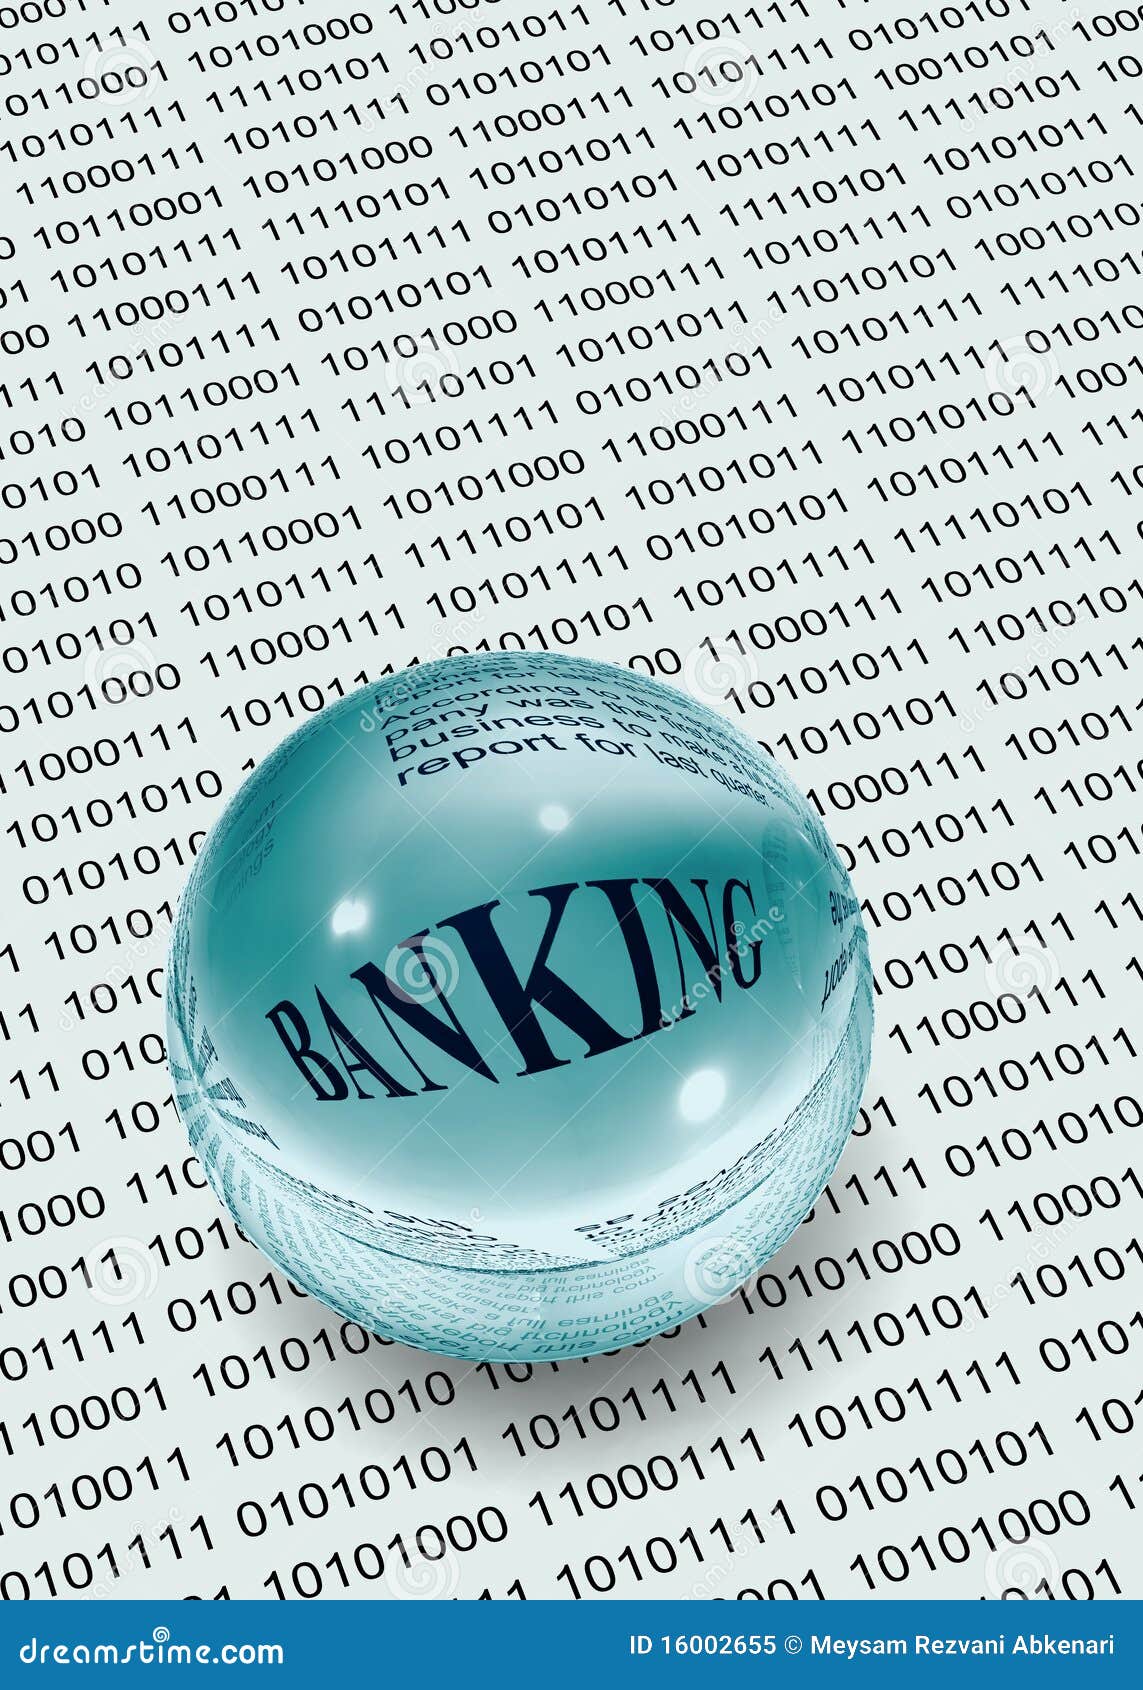 banking on data